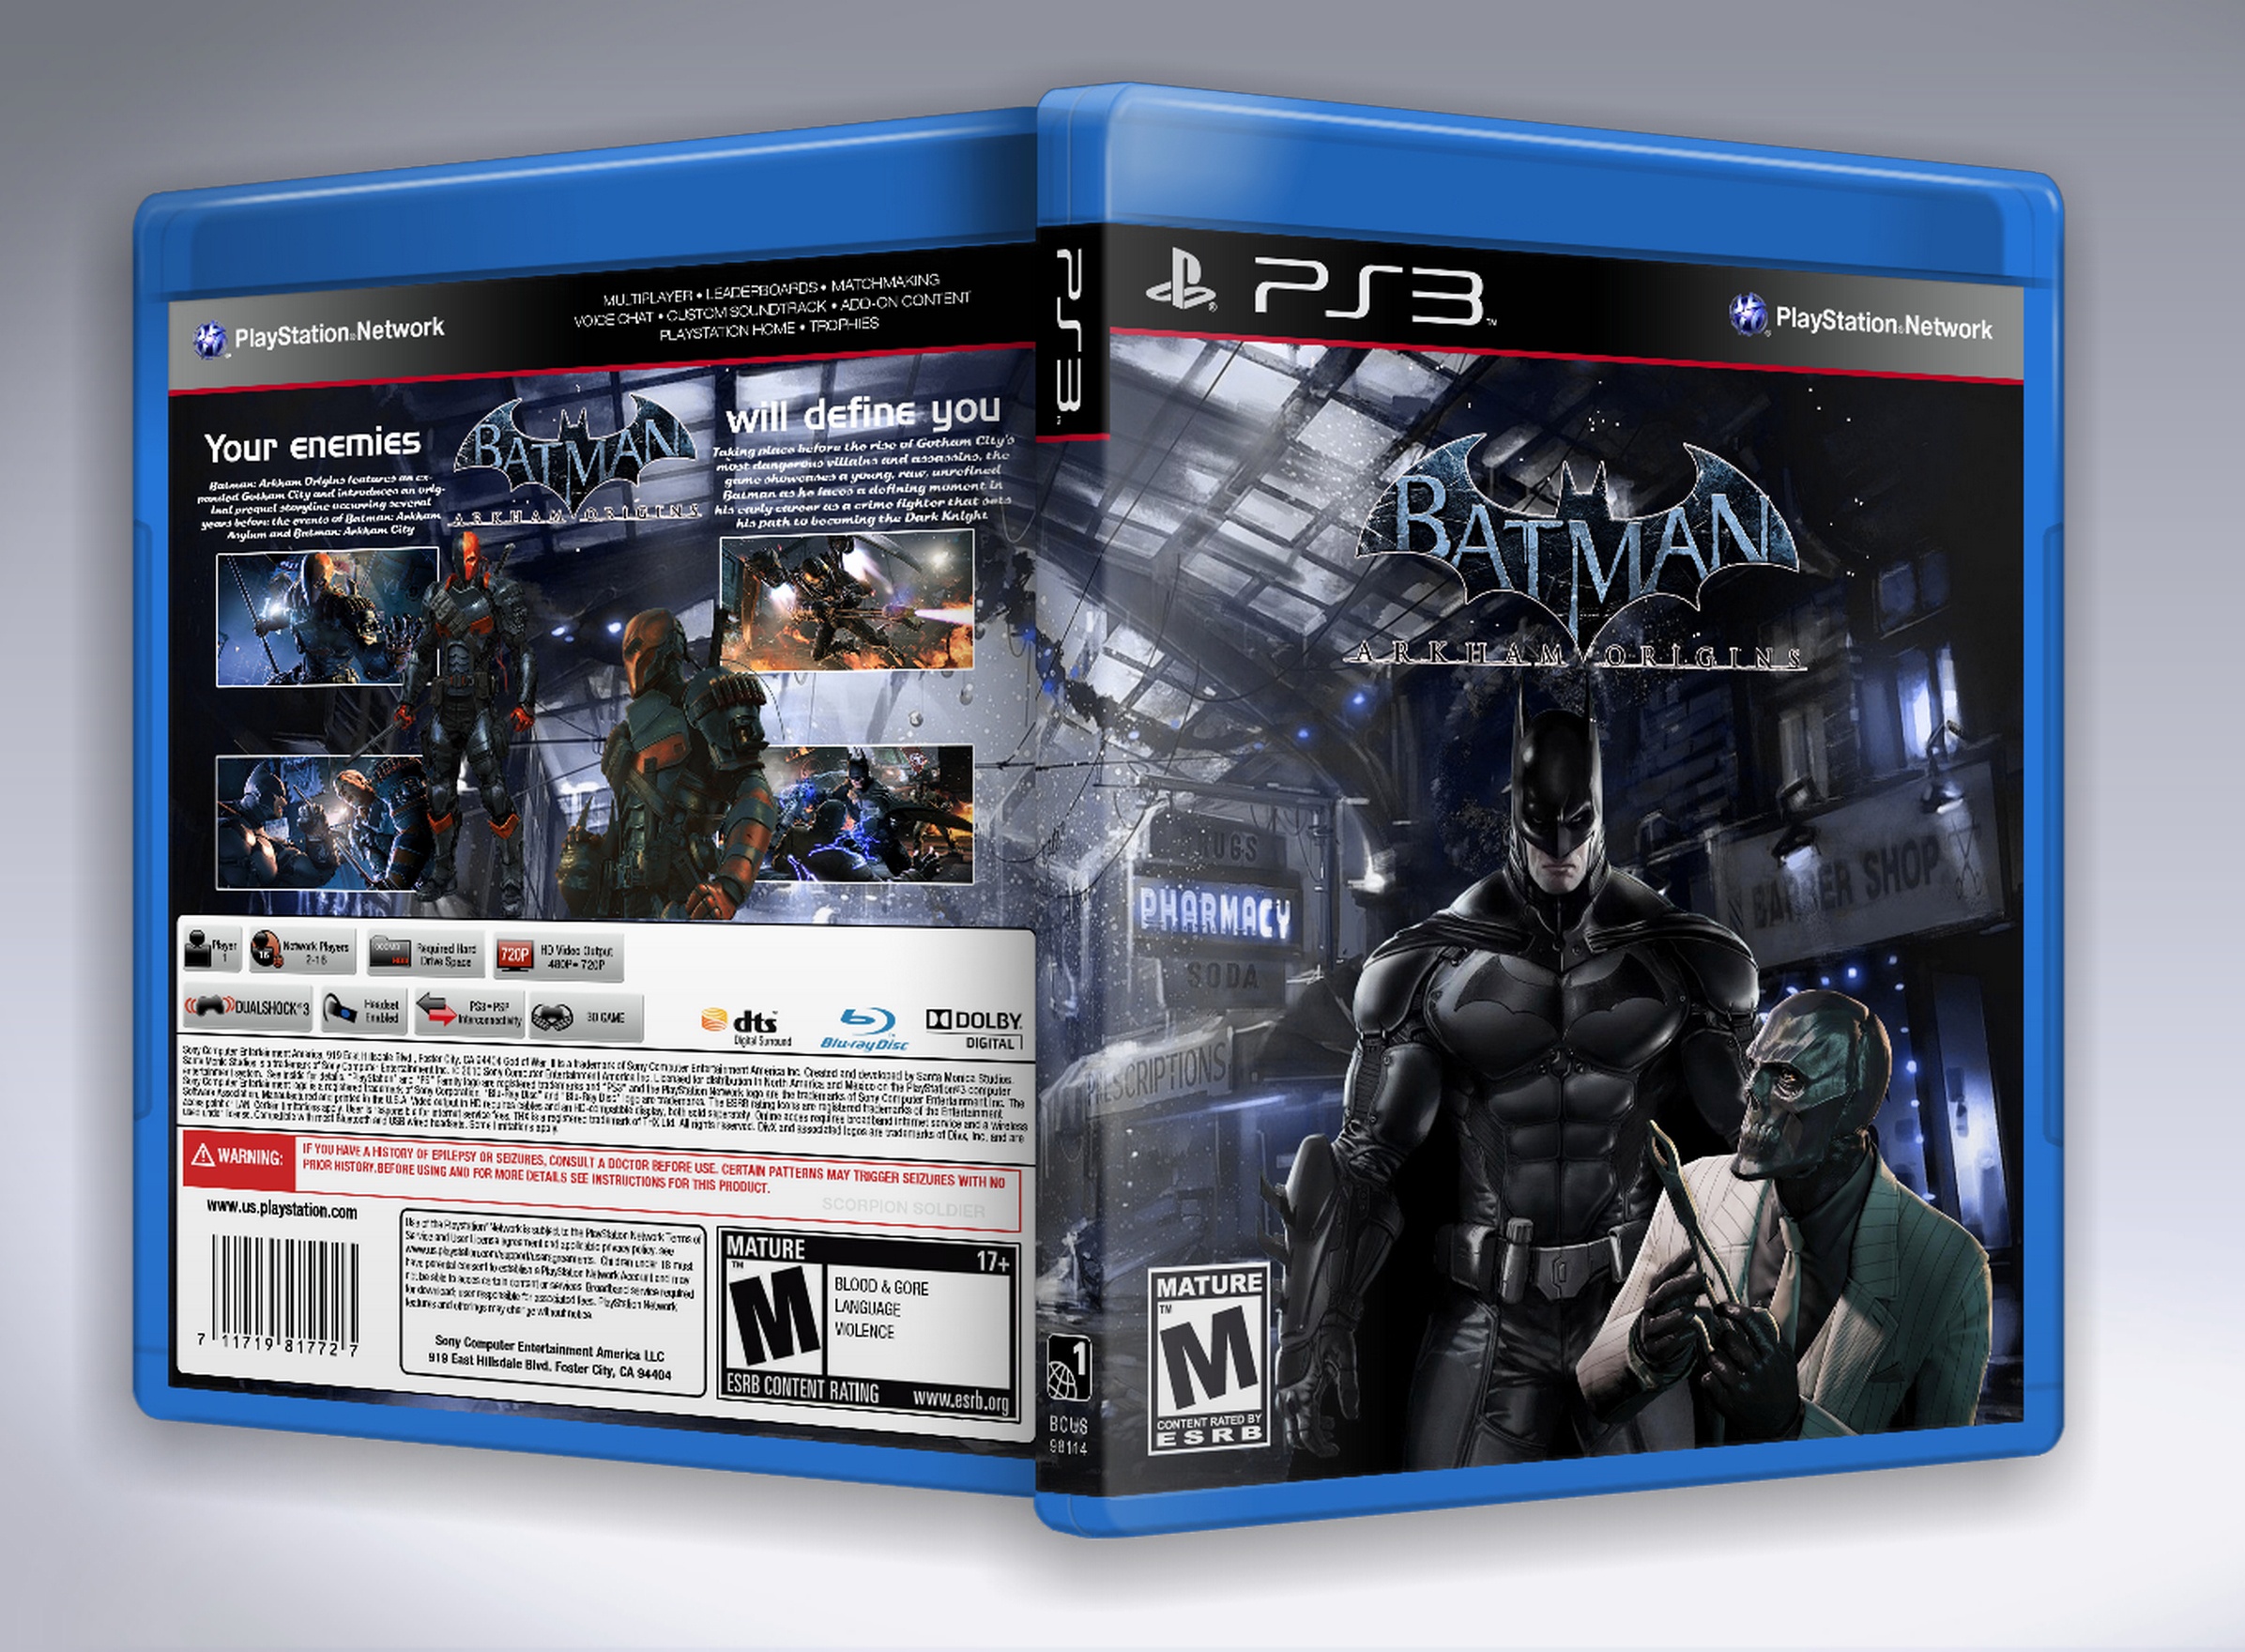 Viewing full size Batman Arkham Origins box cover.